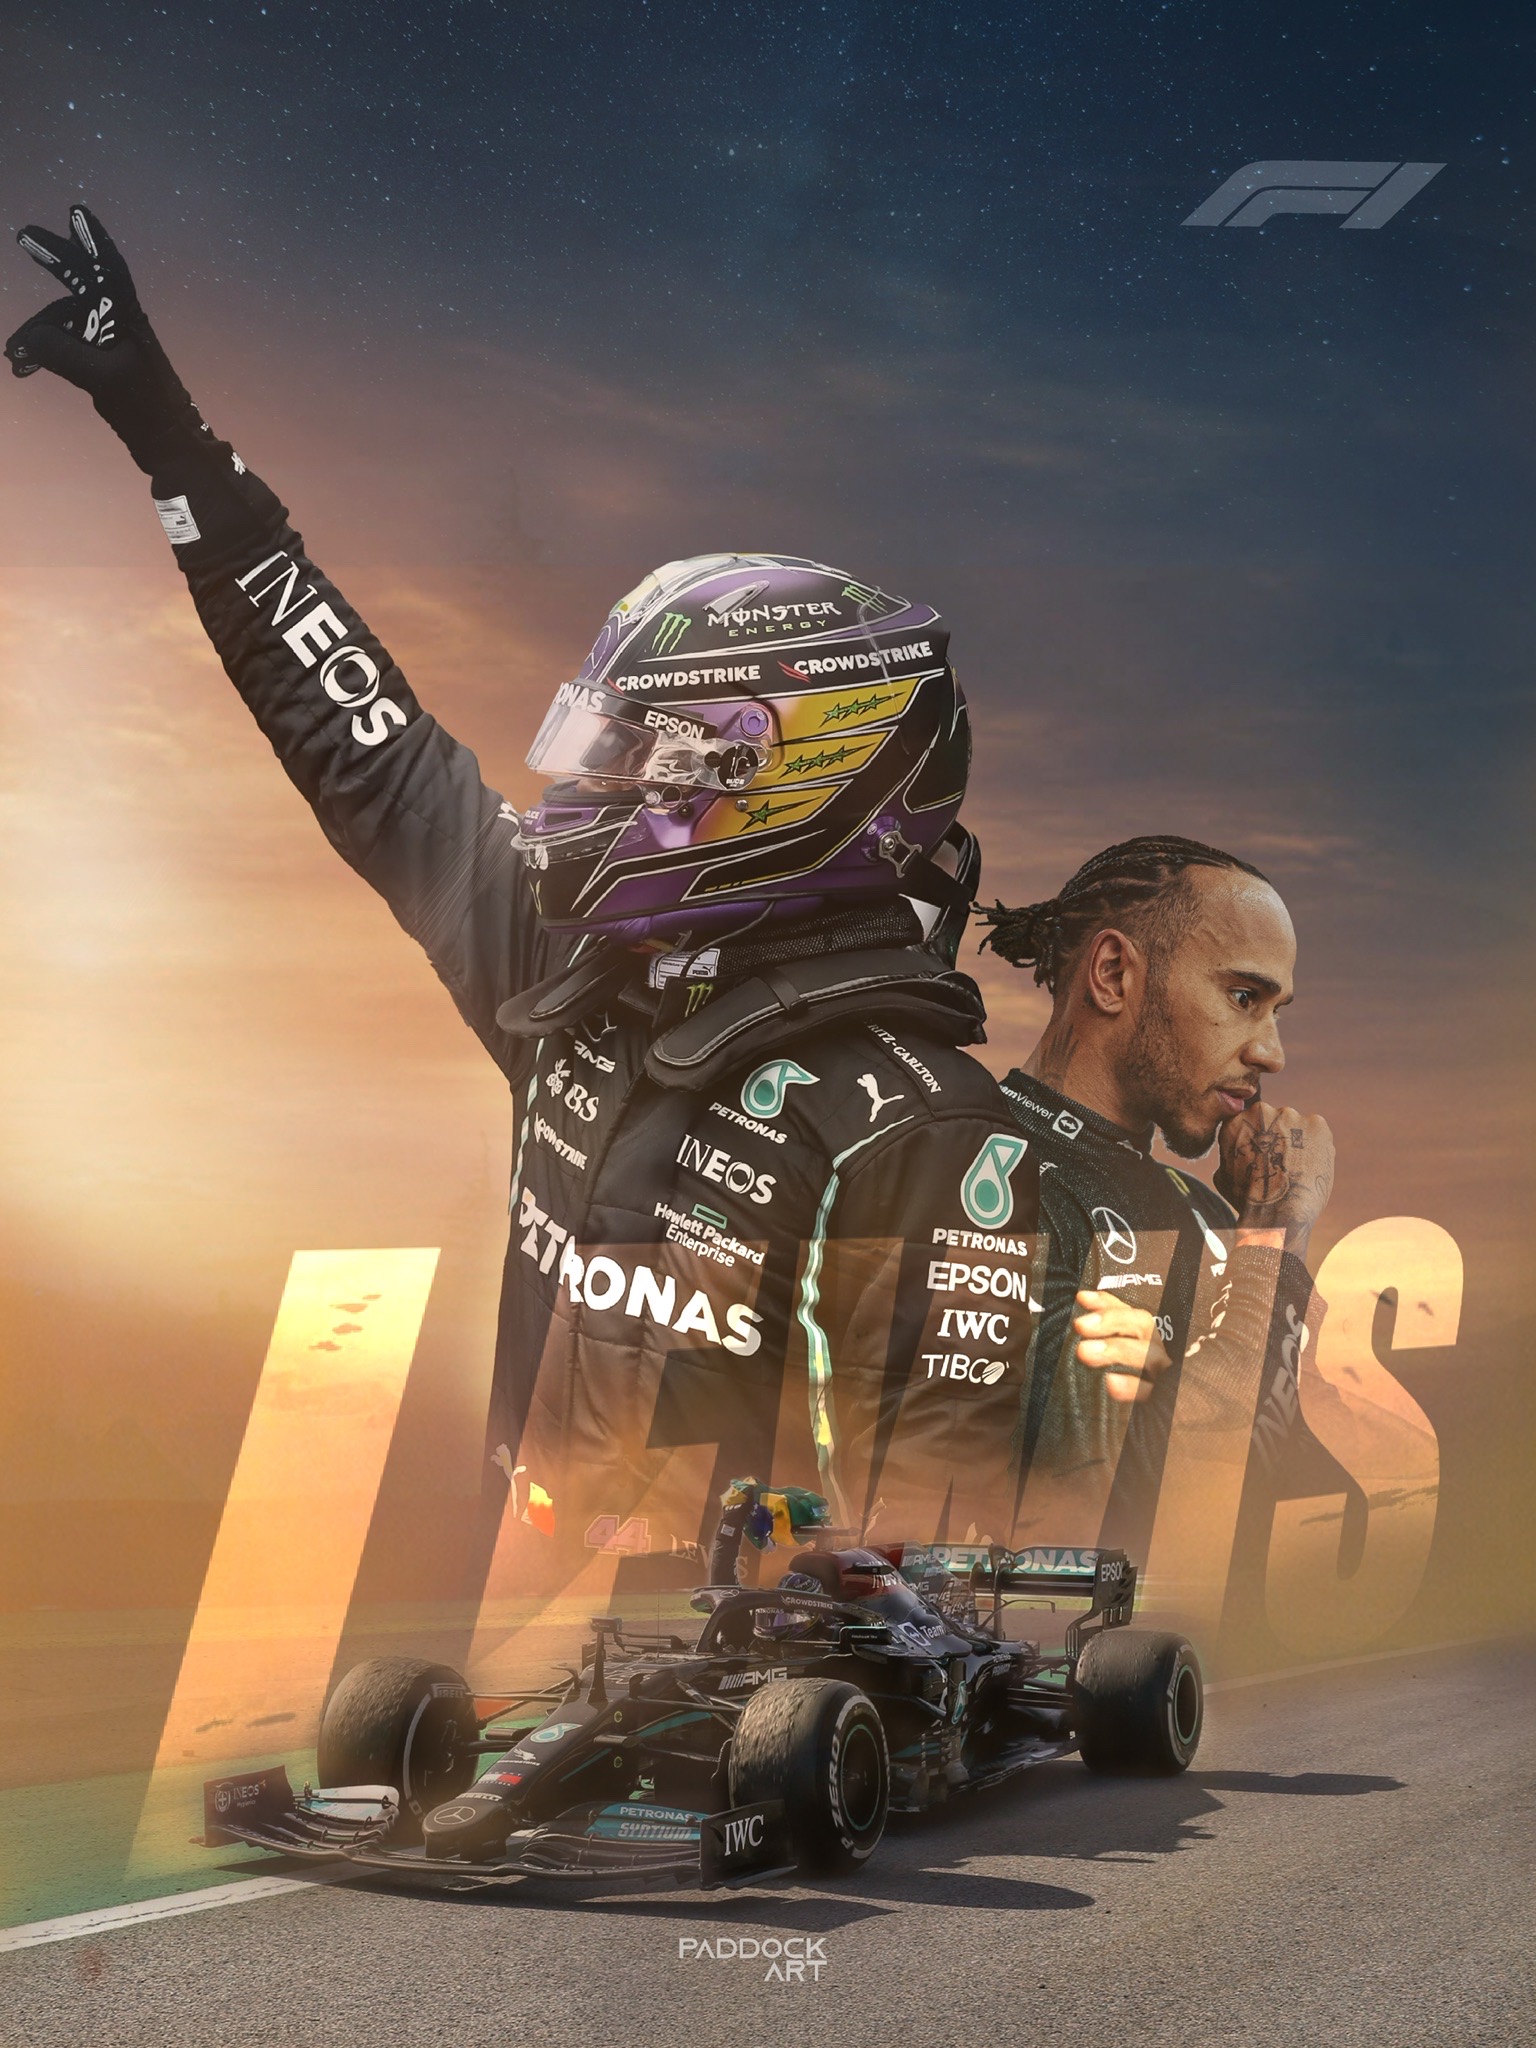 Lewis Hamilton Poster Brazil 2021 by Paddockart on DeviantArt